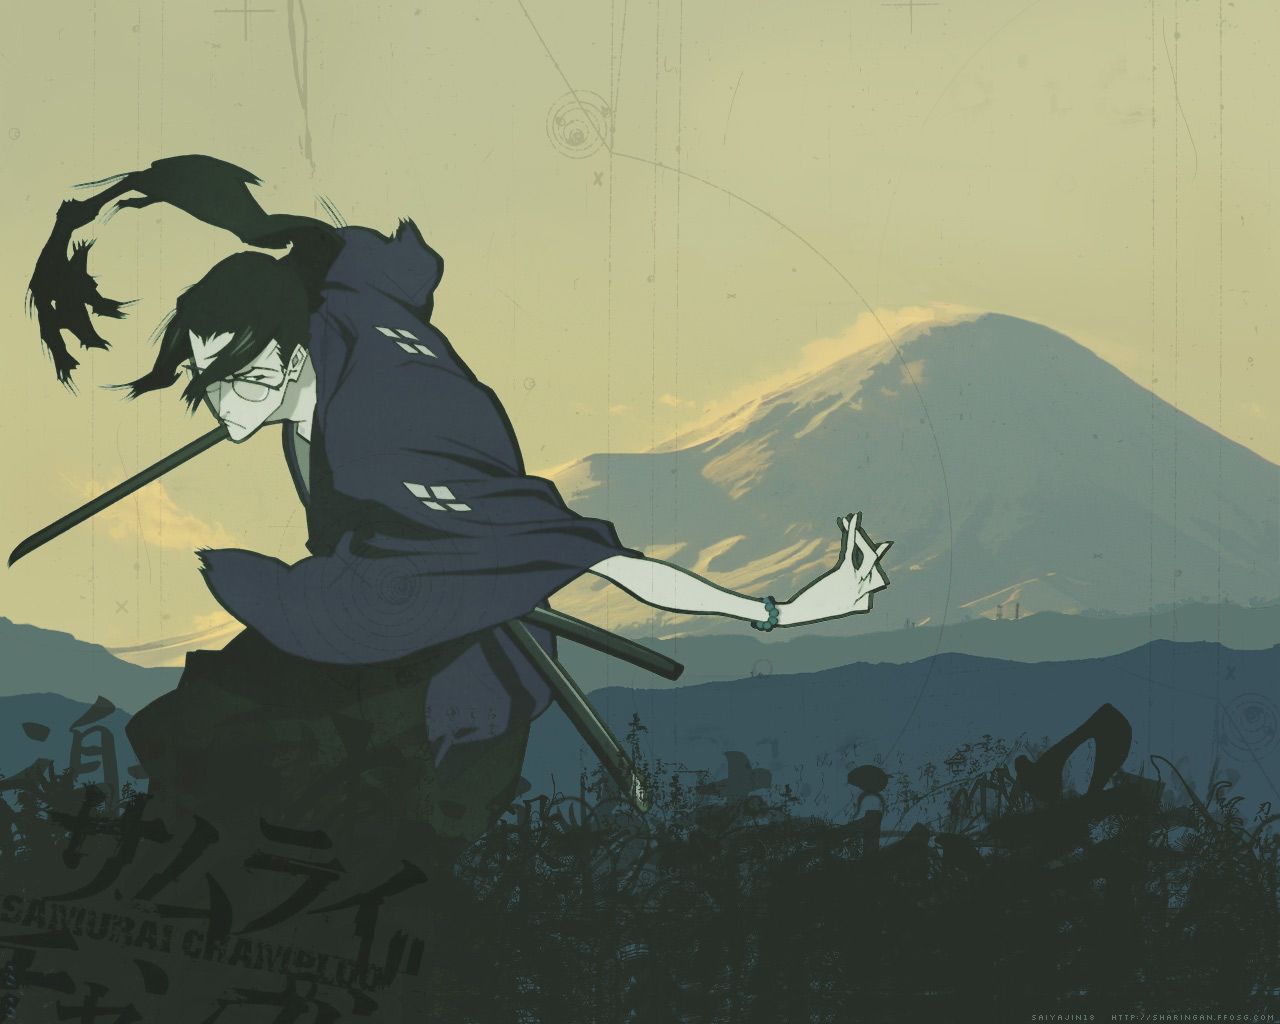 68 Samurai Champloo HD Wallpapers Backgrounds - Wallpaper Abyss